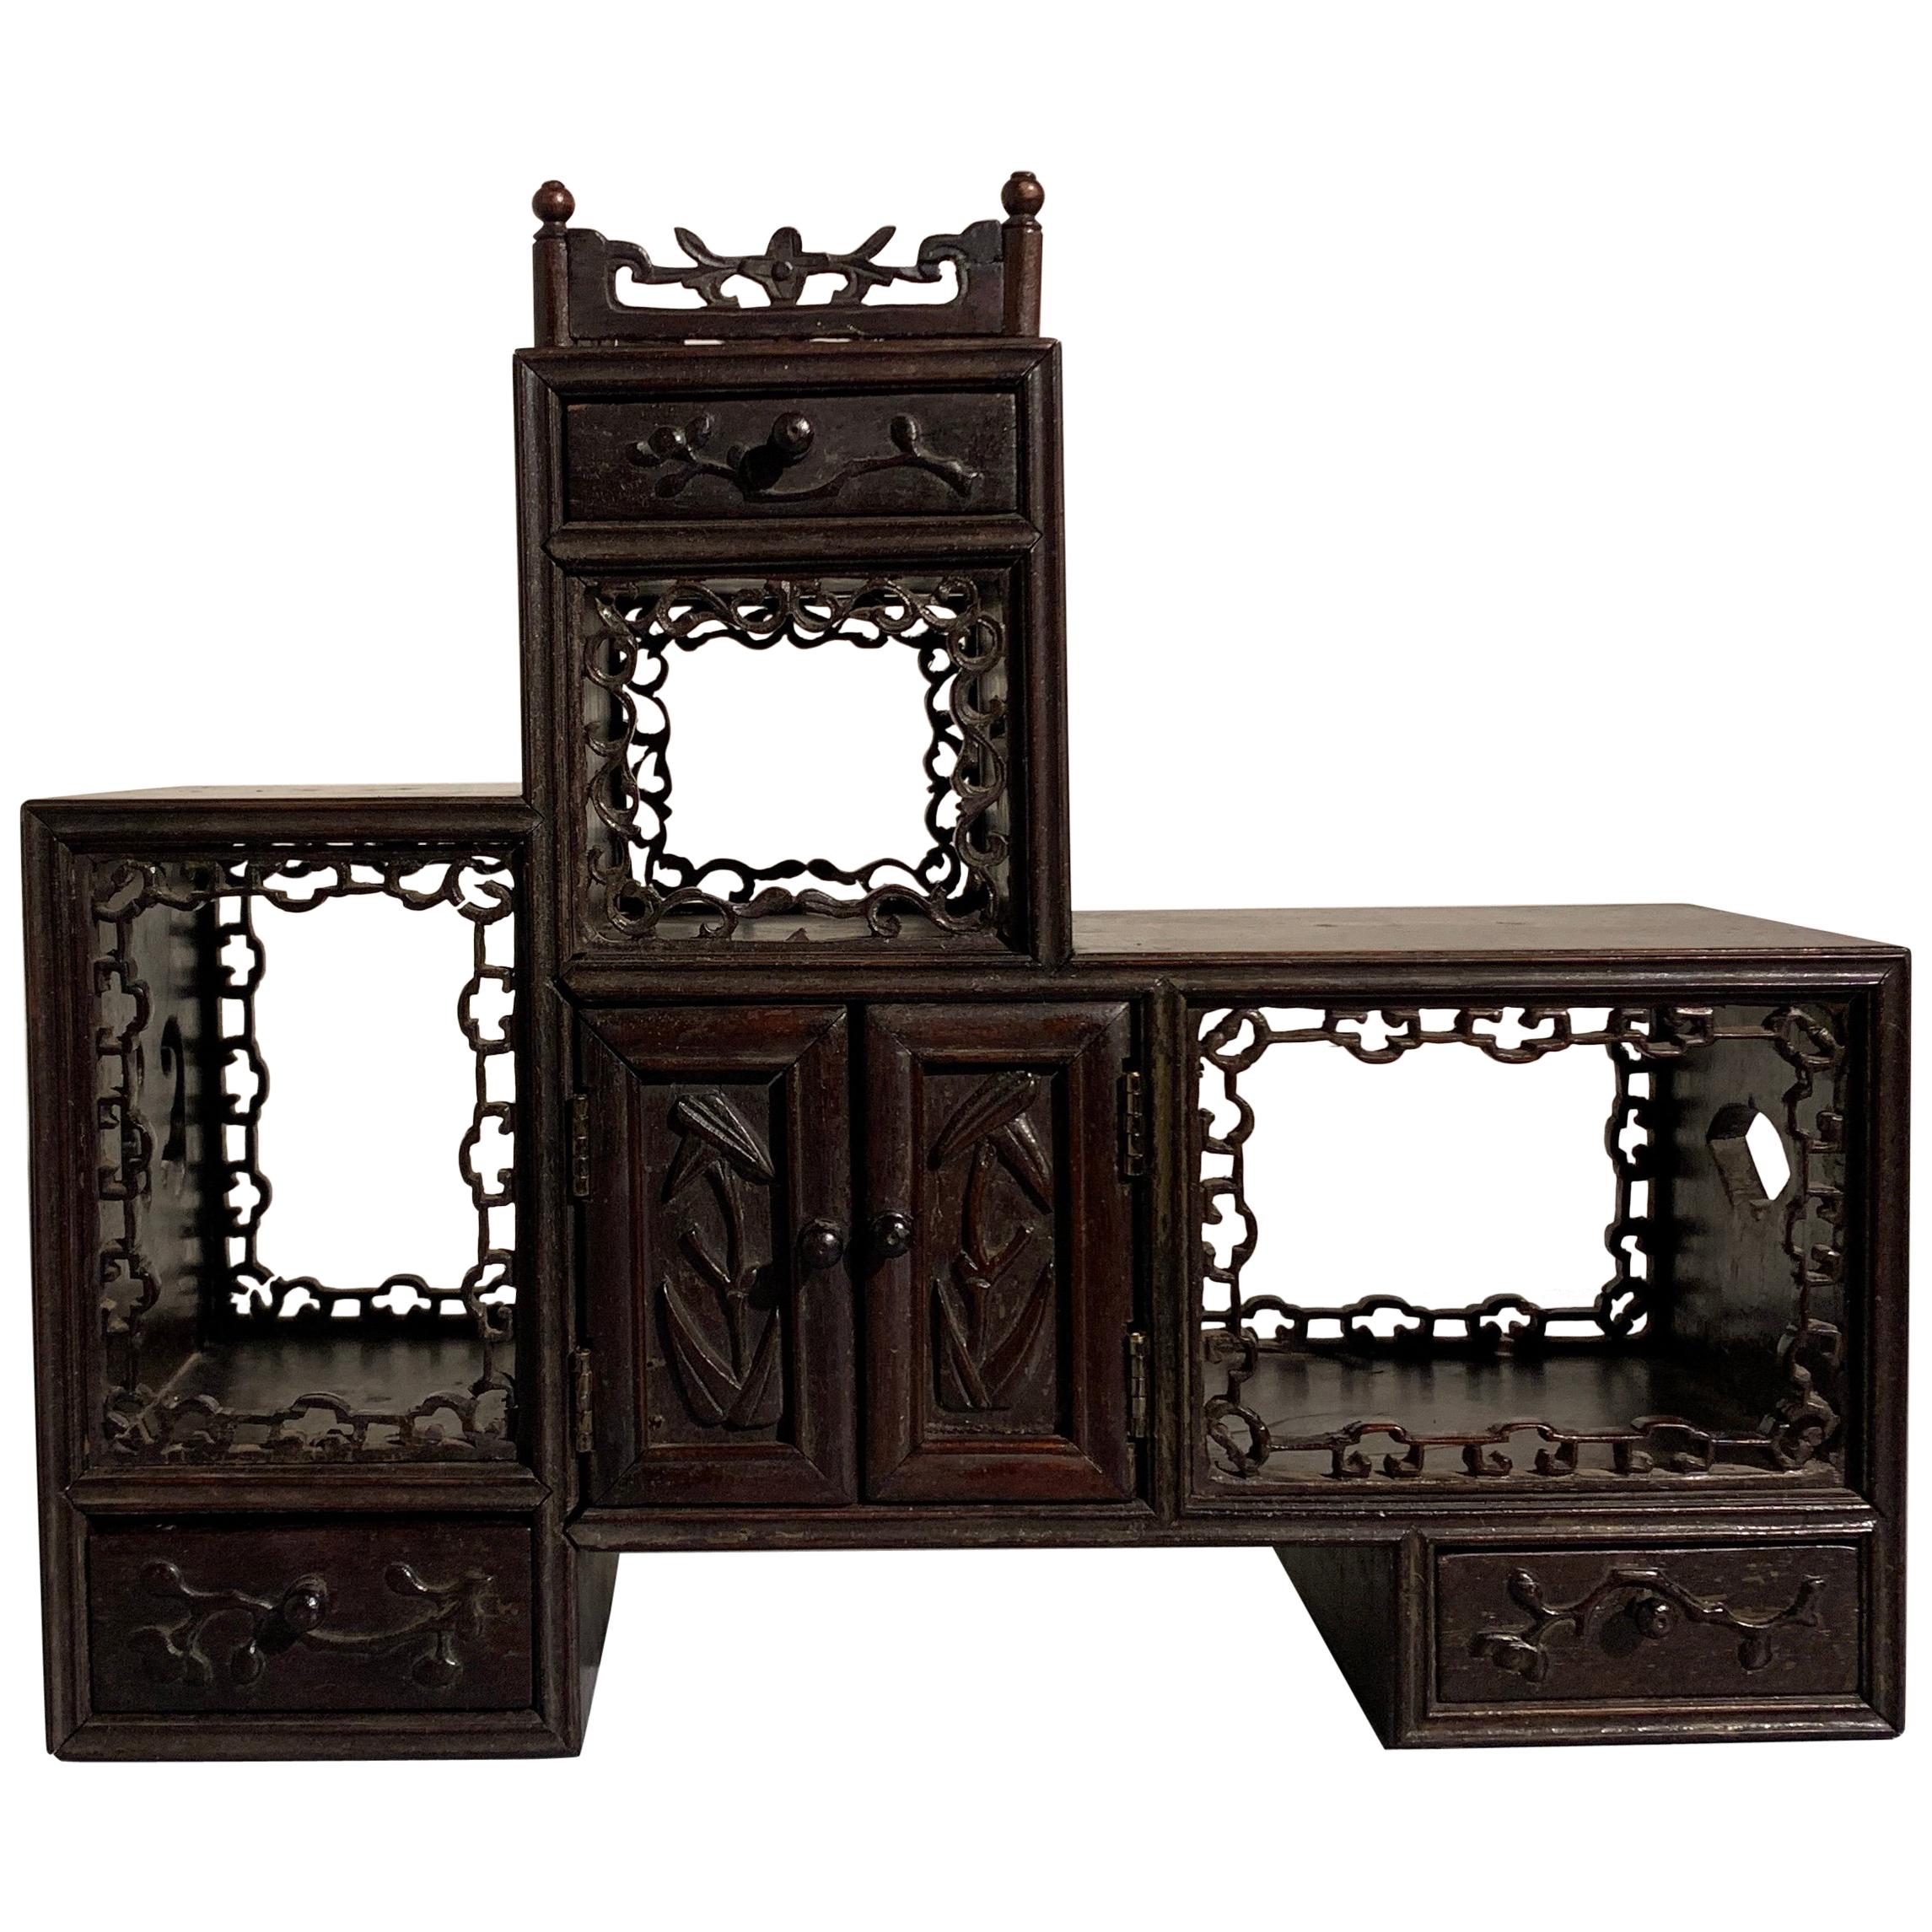 Chinese Late Qing Dynasty Hardwood Miniature Display Cabinet, Doubaoge